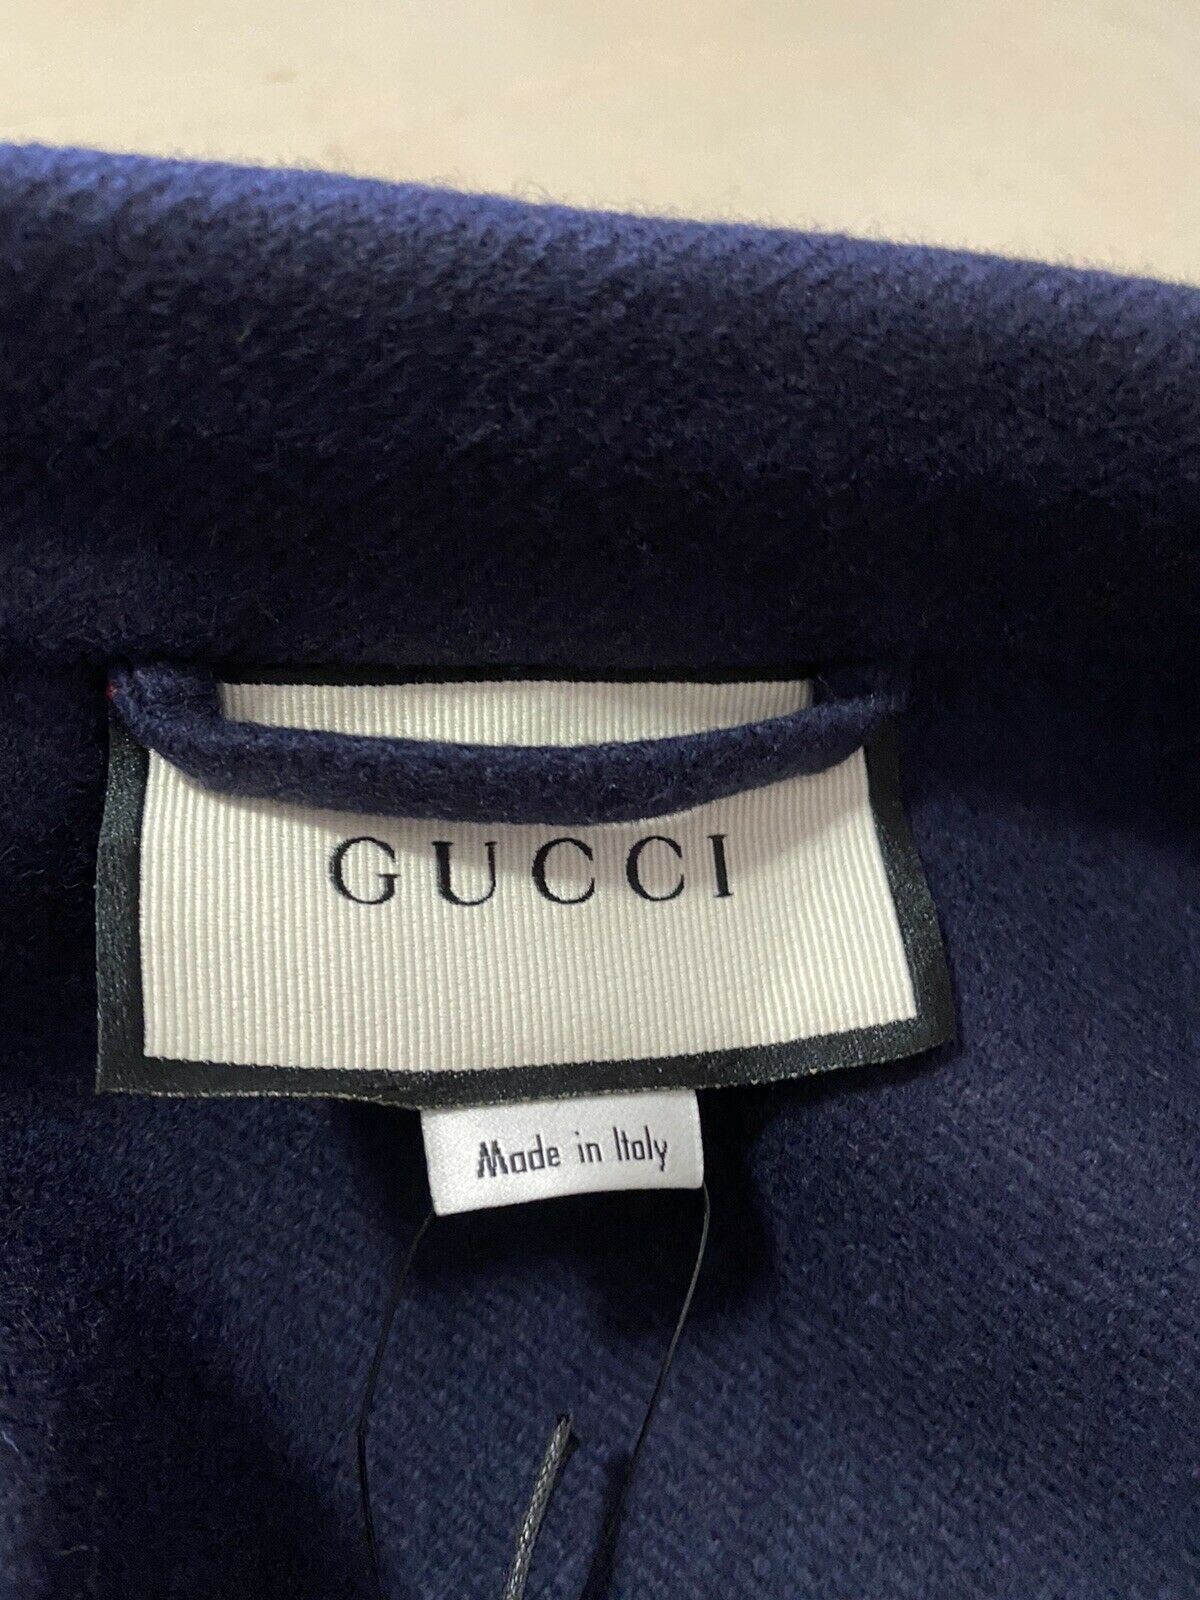 New $4700 Gucci Men’s Camel Hair Overcoat Coat Navy 38 US/48 Eu Italy